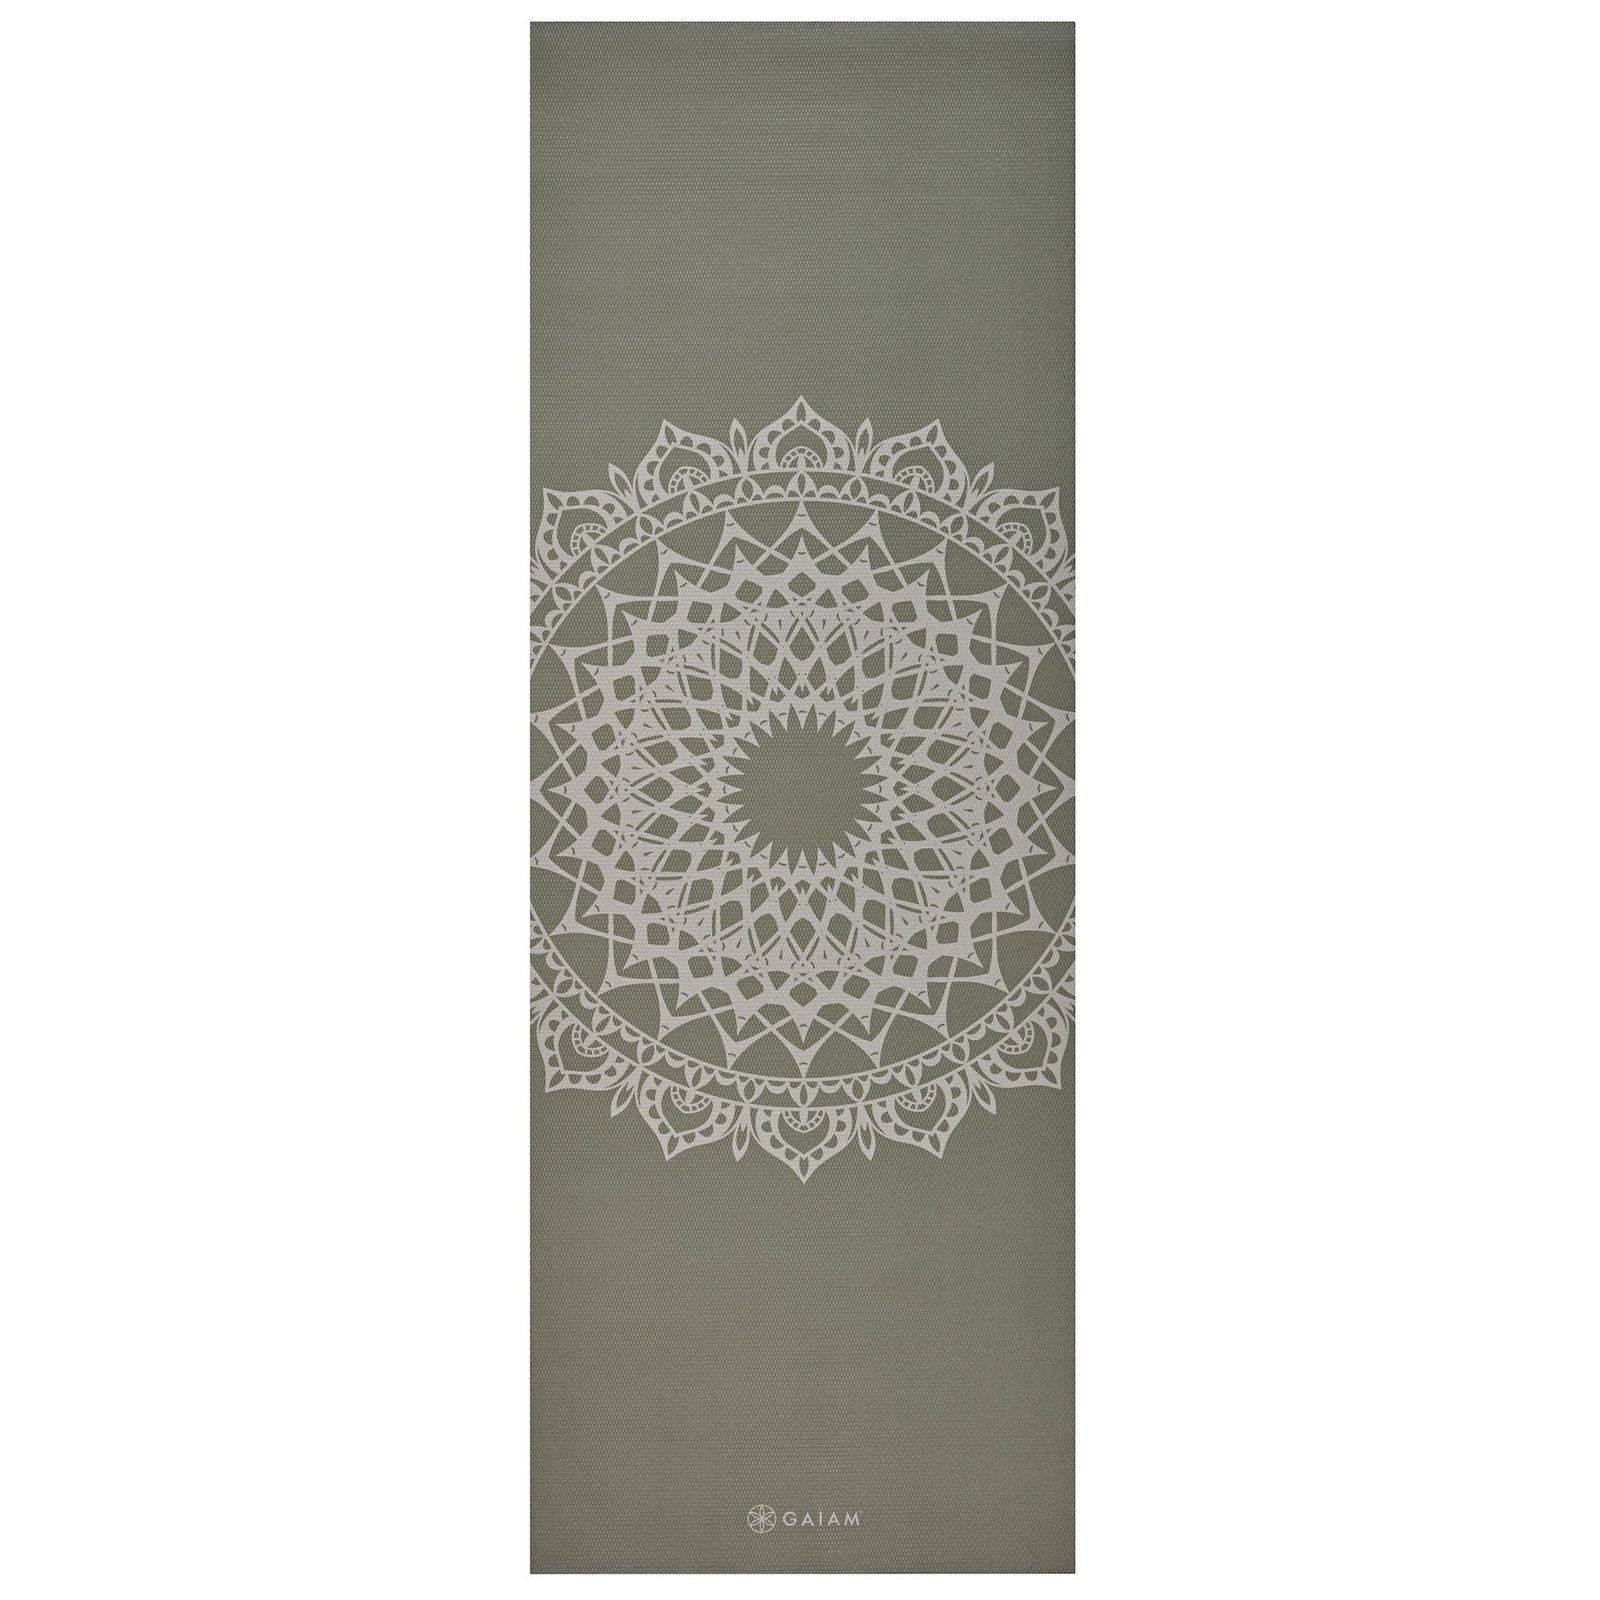 GAIAM Olive Marrakesh Yoga Mat 5 mm Classic Printed 1 st